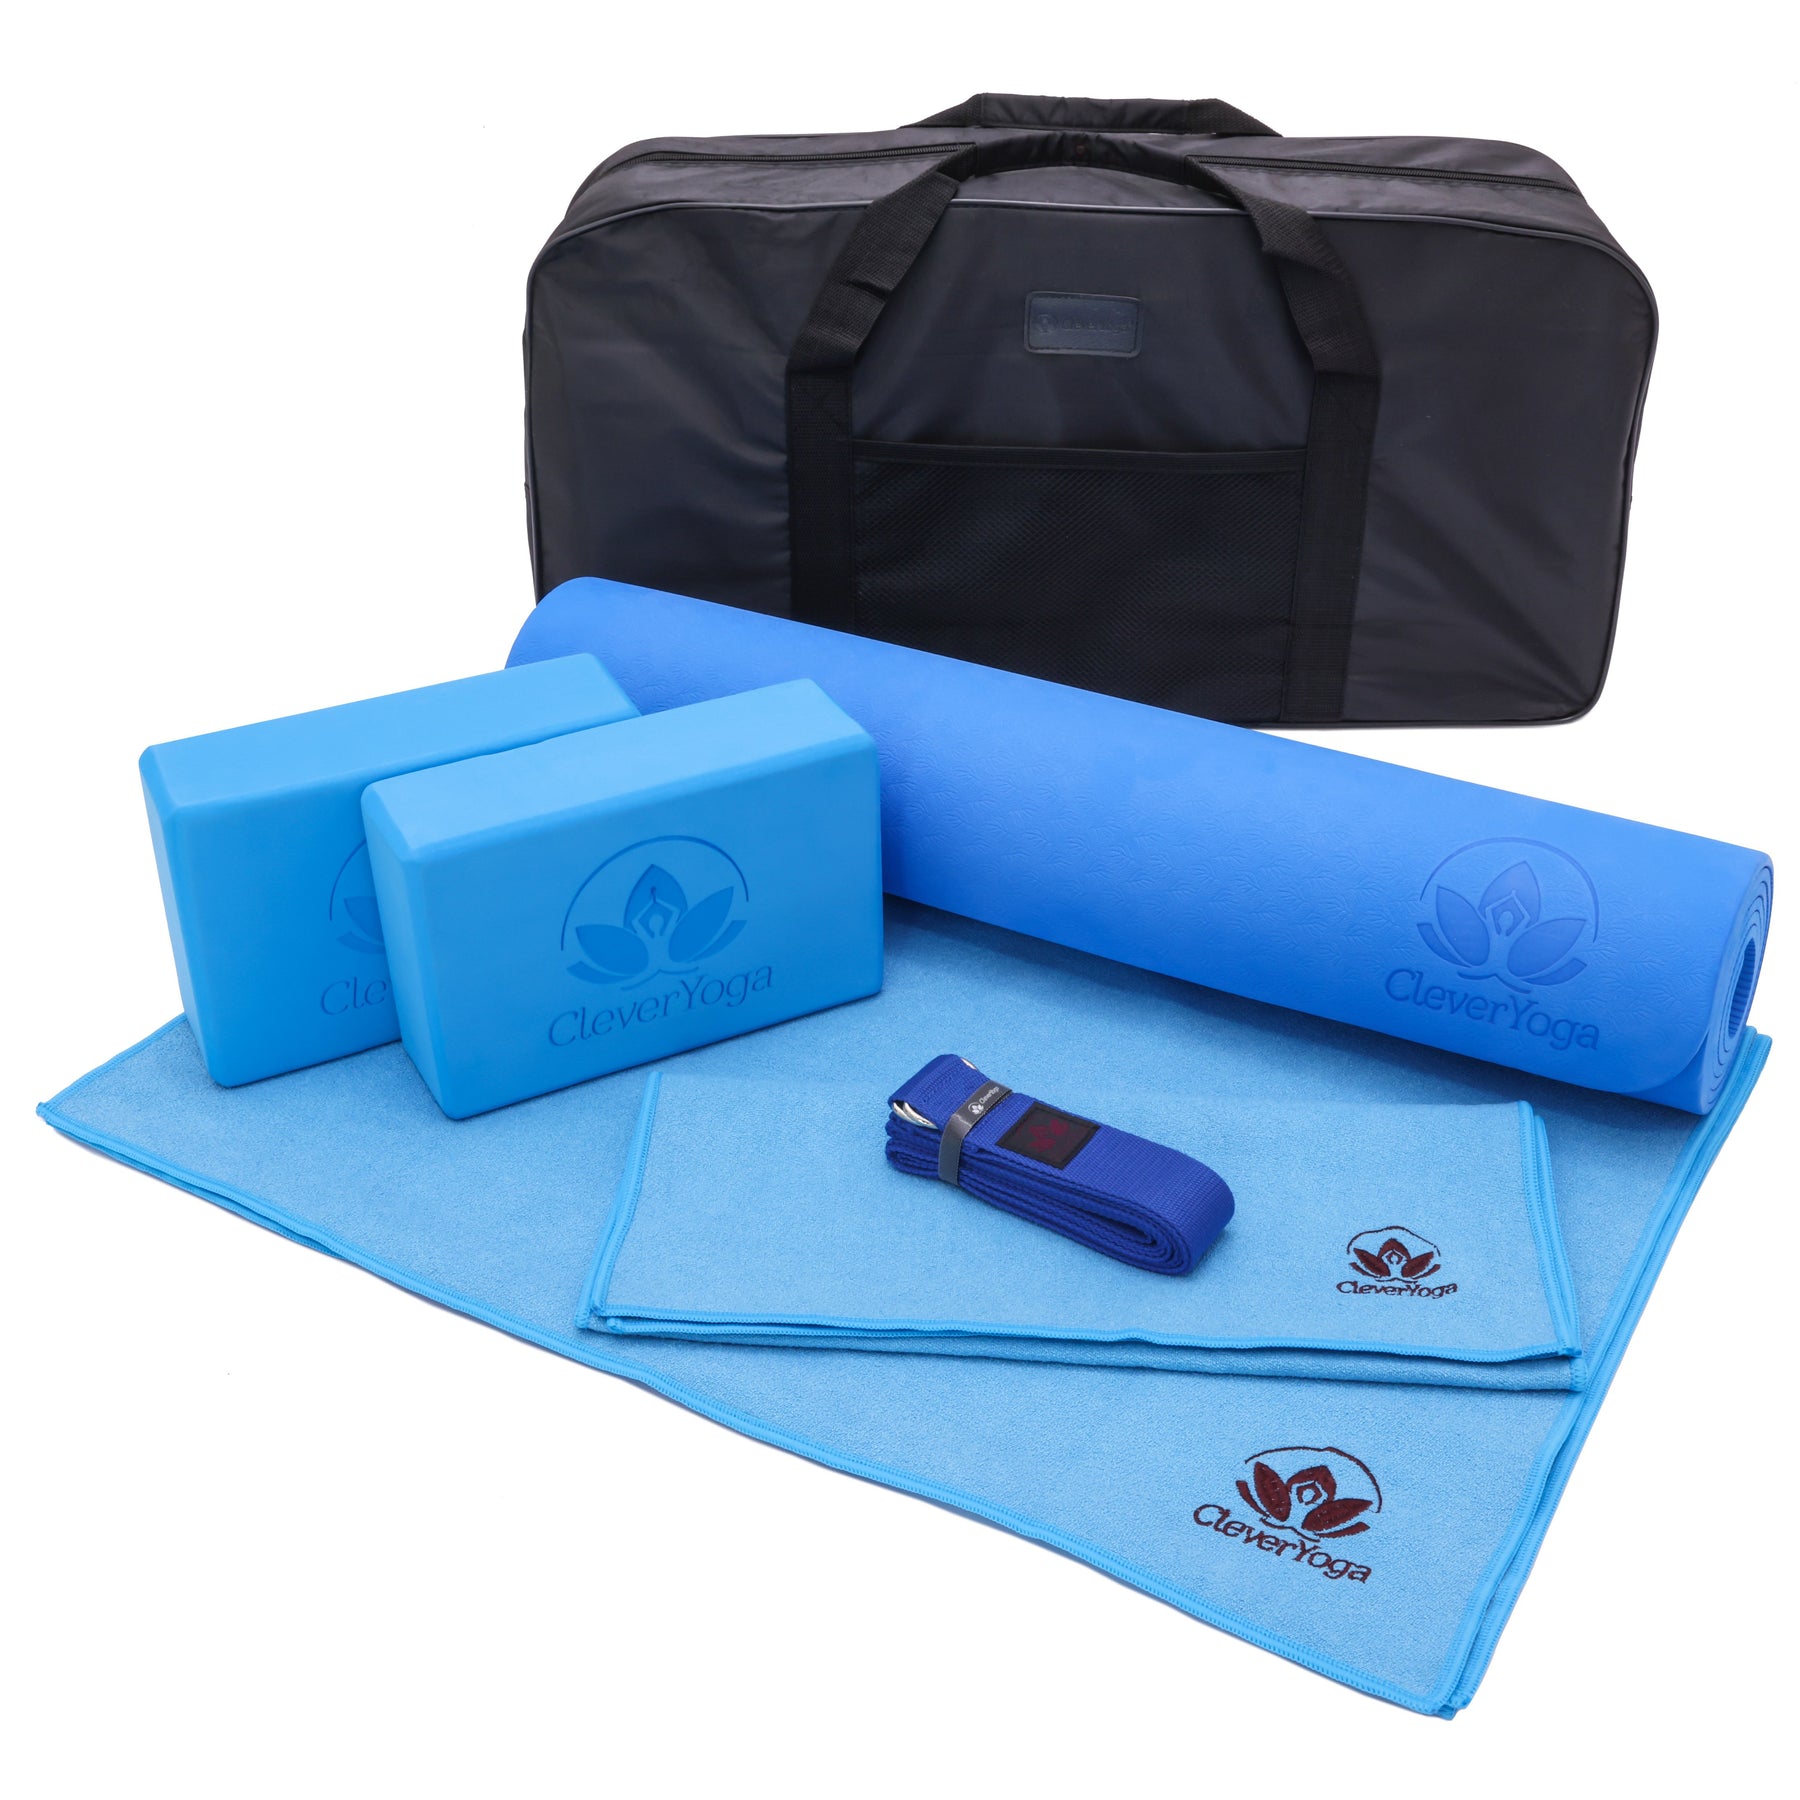 ABTECH Yoga Starter Kit for Kids - 5 Pcs. Yoga Blocks, Non-Slip Yoga Towel,  Yoga Ball w/ Pump & a Unicorn Design Drawstring Bag - Non-Toxic Chemical  Free - Ages 4-12 